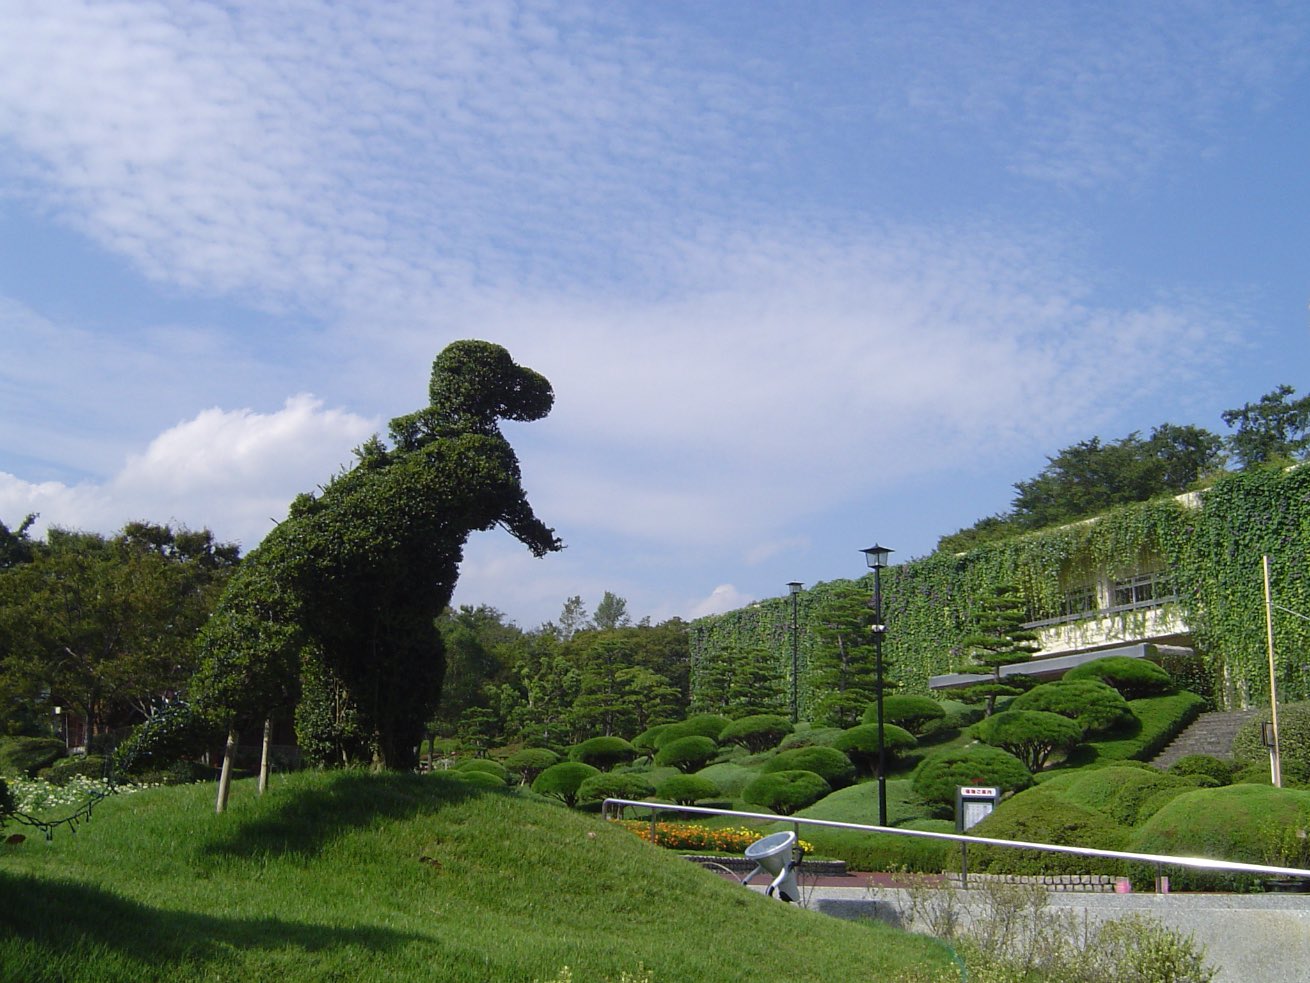 The Hiroshima Botanical Garden